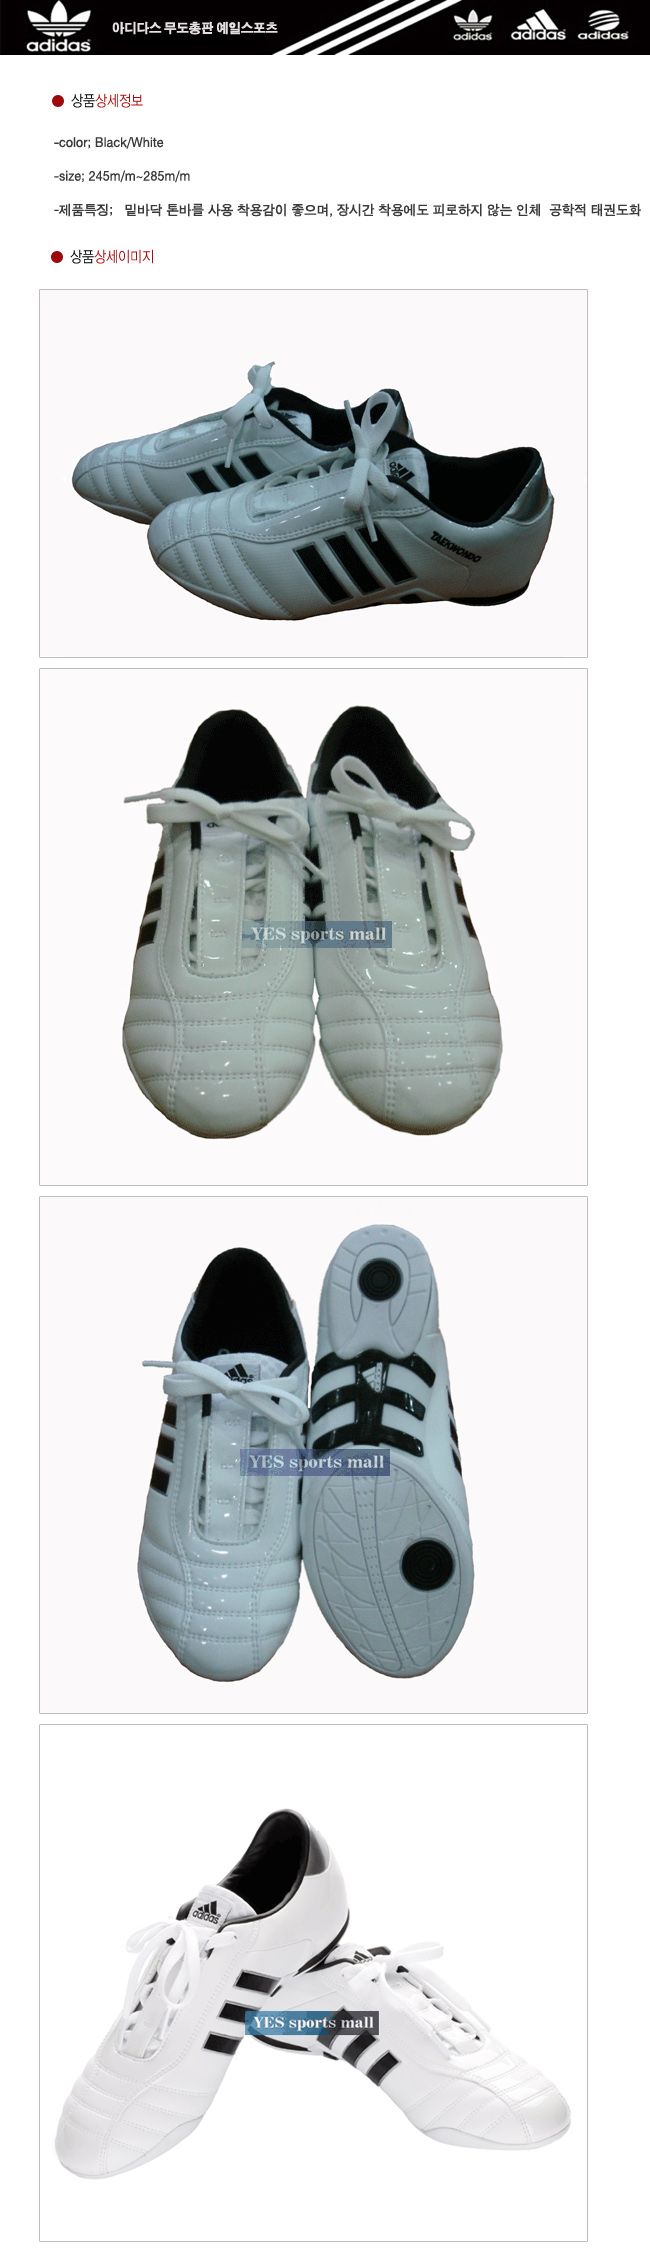 chaussures taekwondo adidas evolution